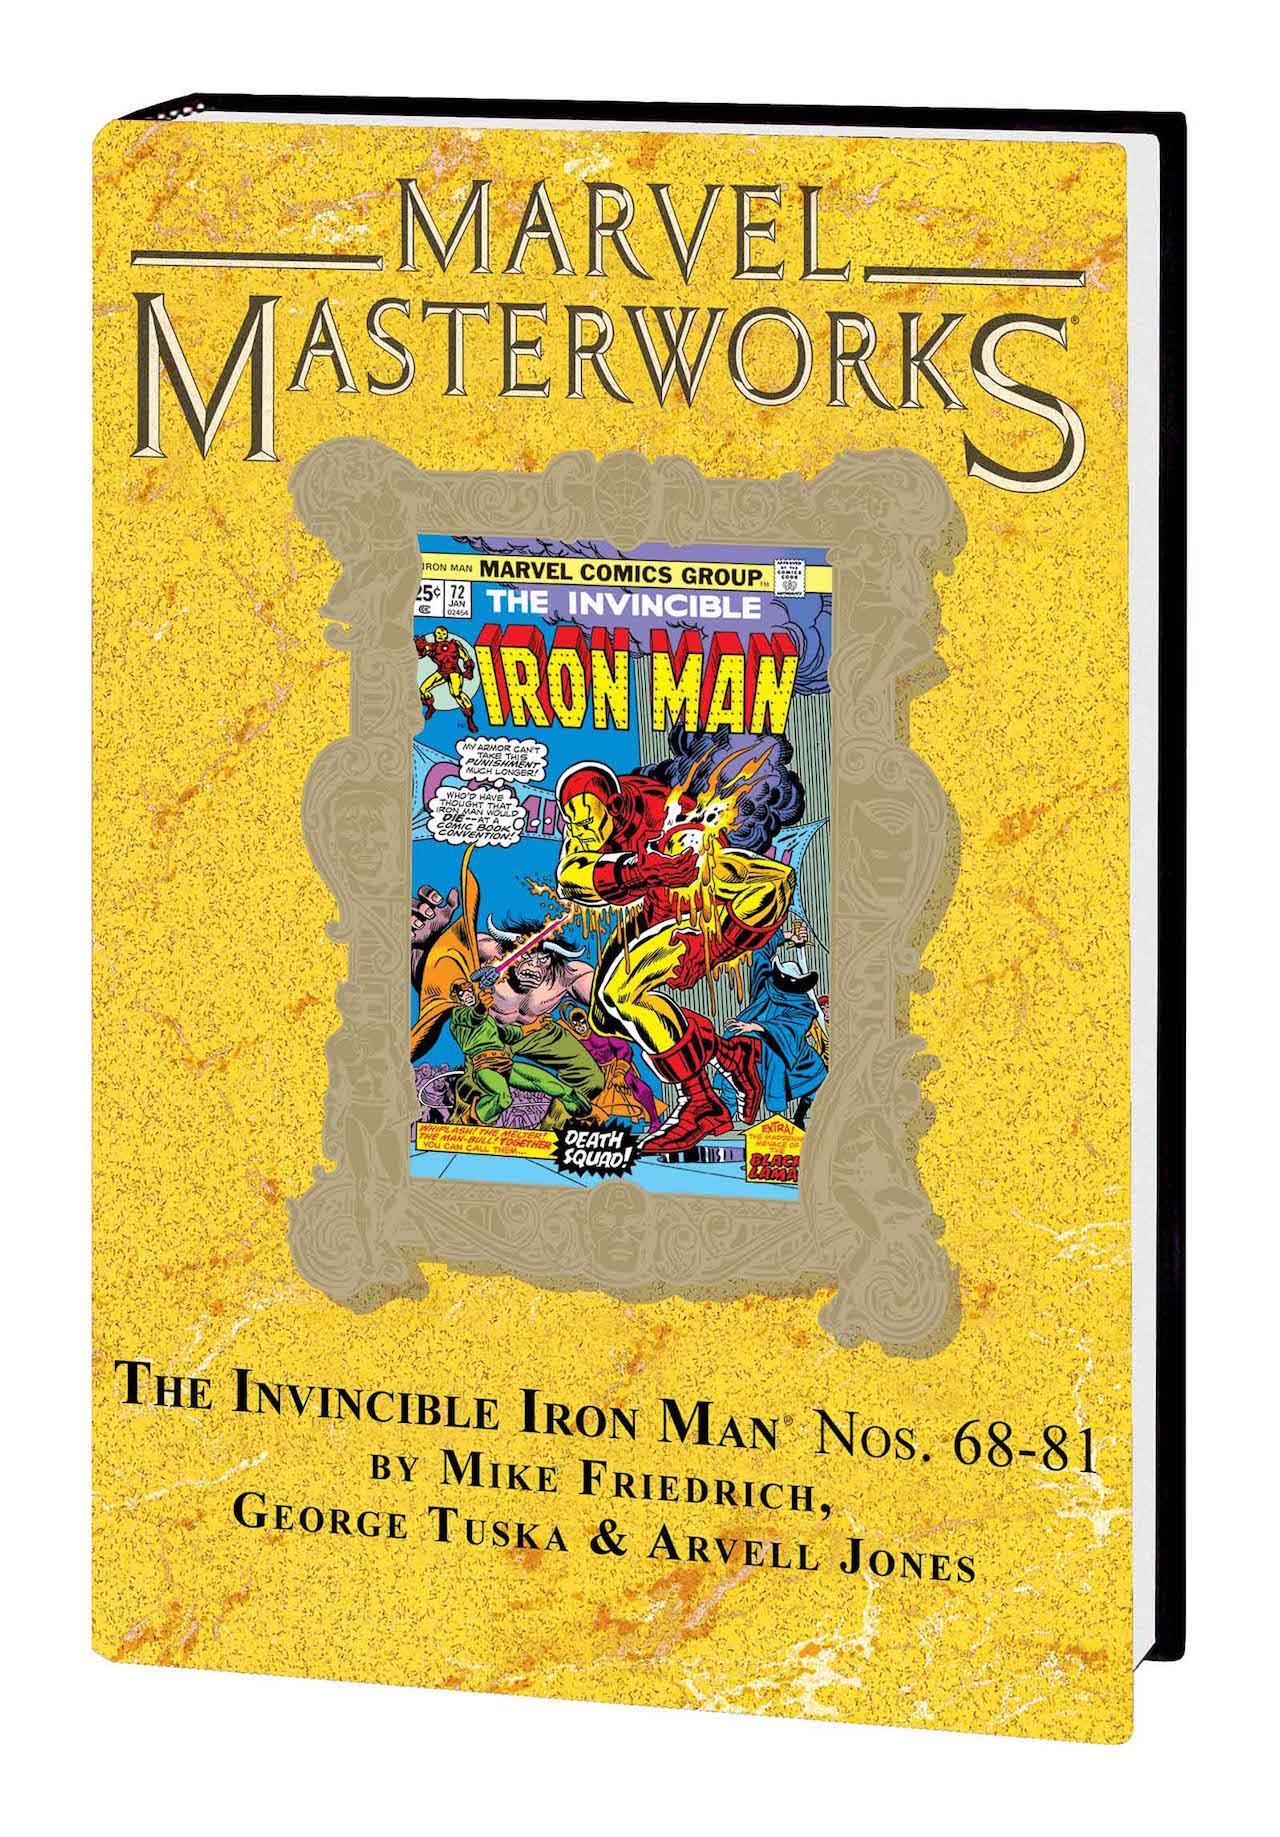 MARVEL MASTERWORKS: THE INVINCIBLE IRON MAN VOL. 10 HC VARIANT